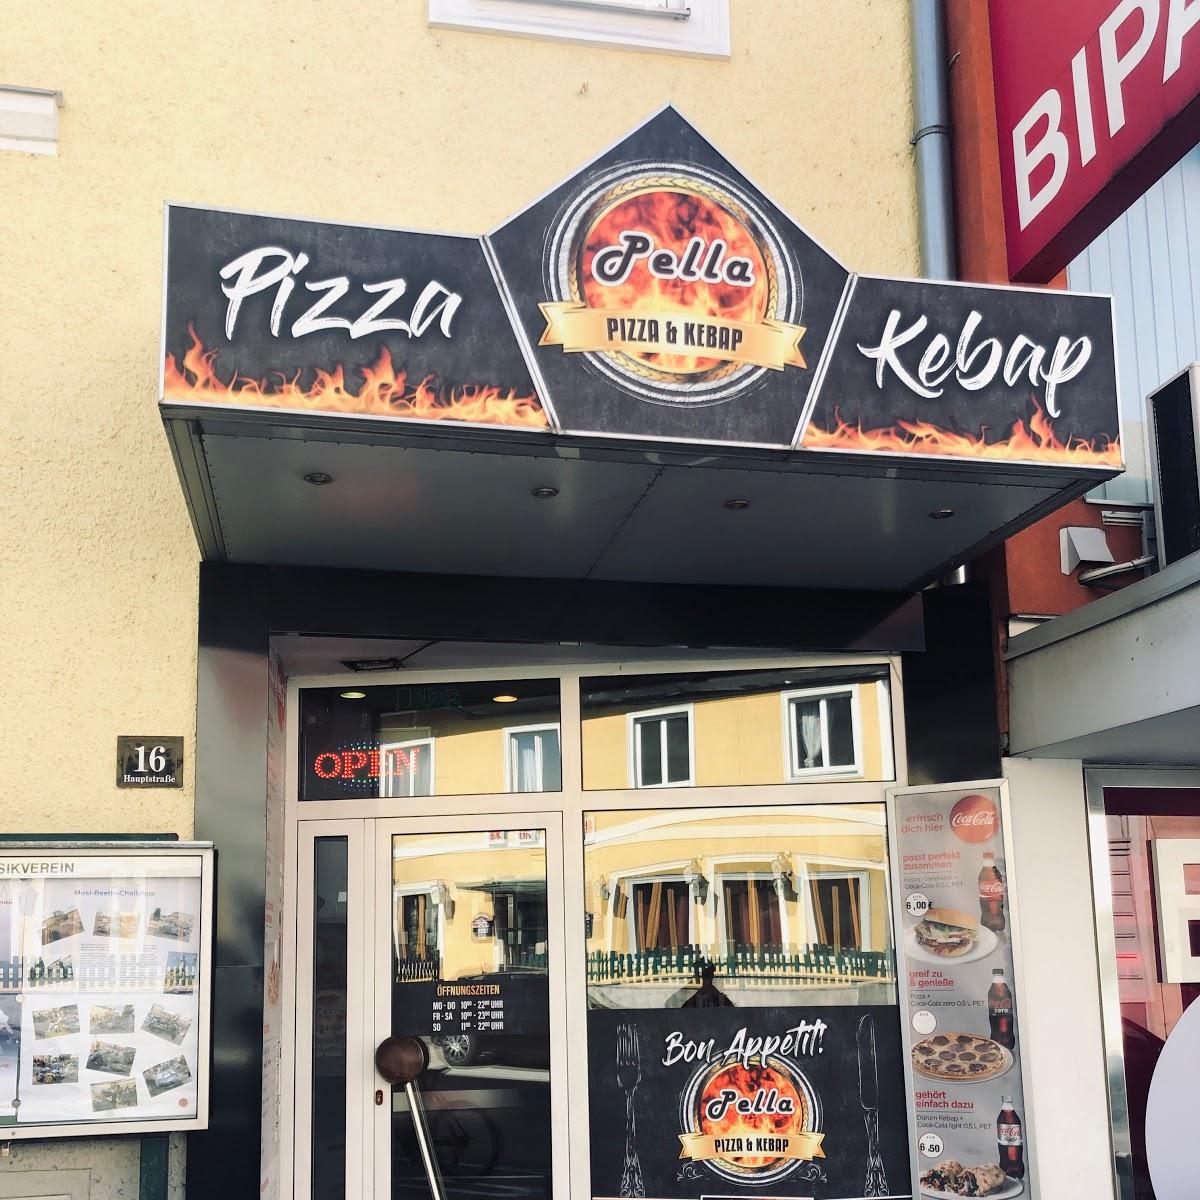 Restaurant "Pizzeria Pella -" in Gallneukirchen